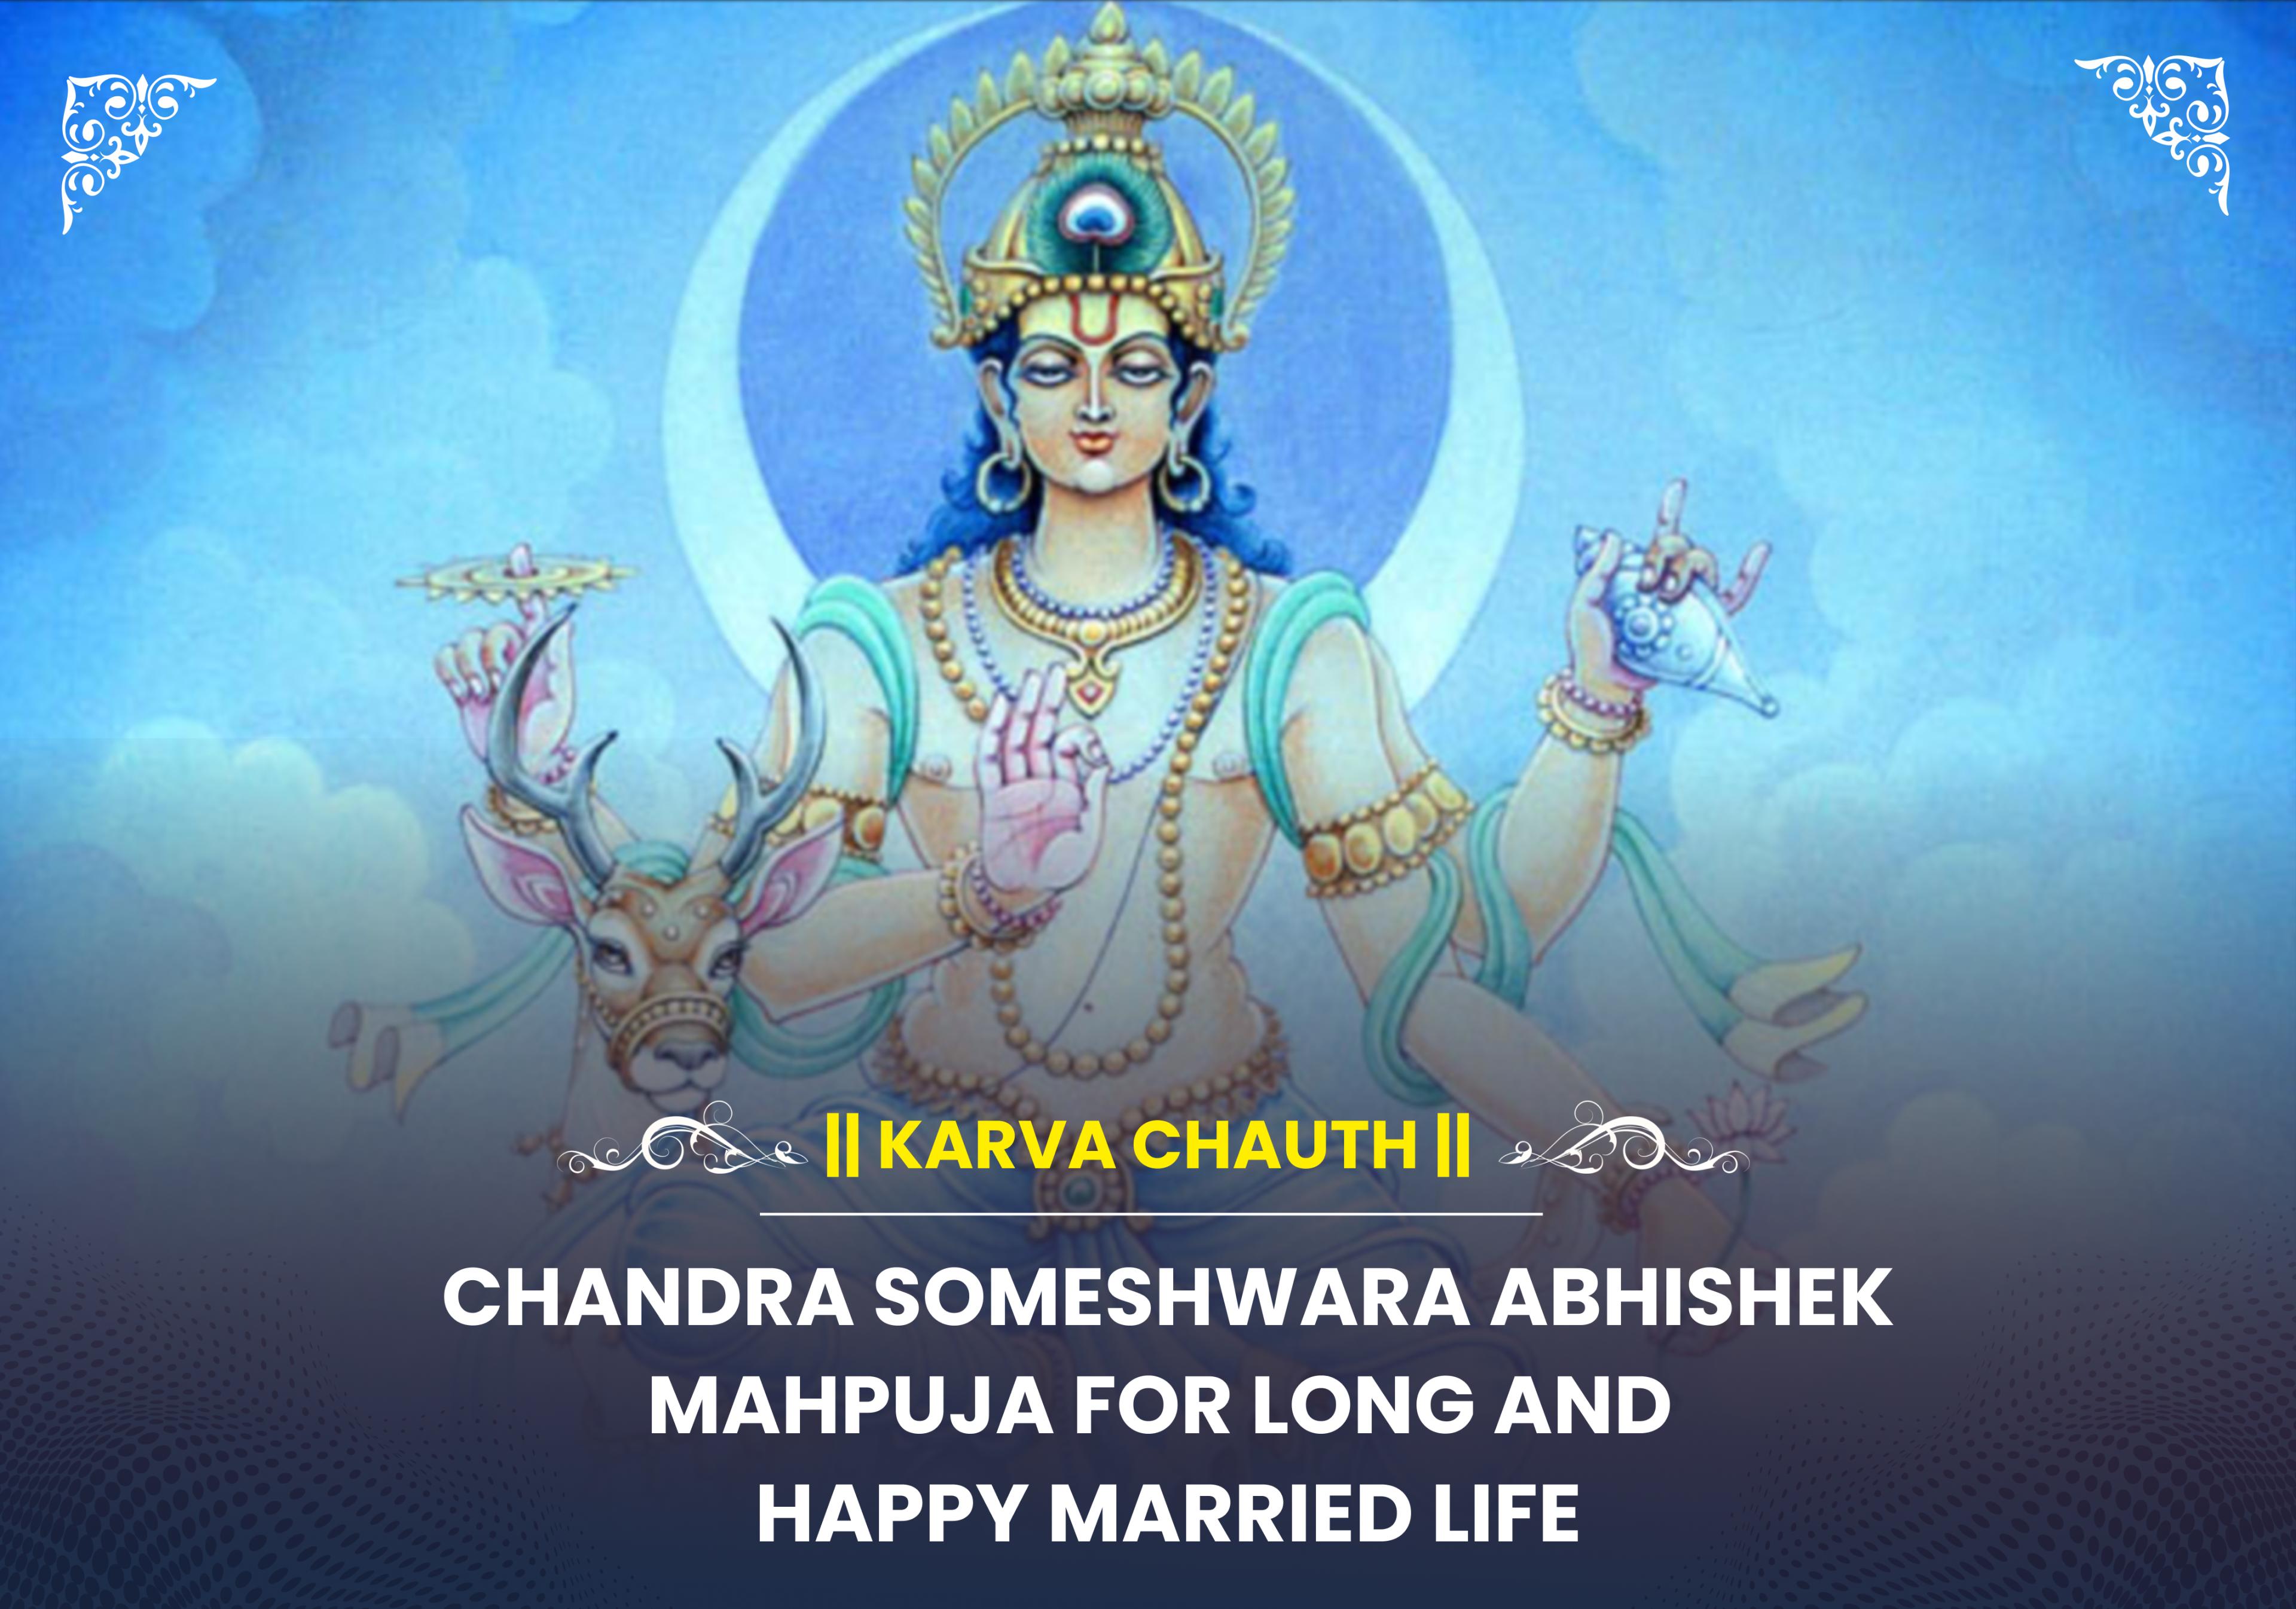 Shri Chandra Someshwara Abhishek Mahapuja For Long and Happy Married Life